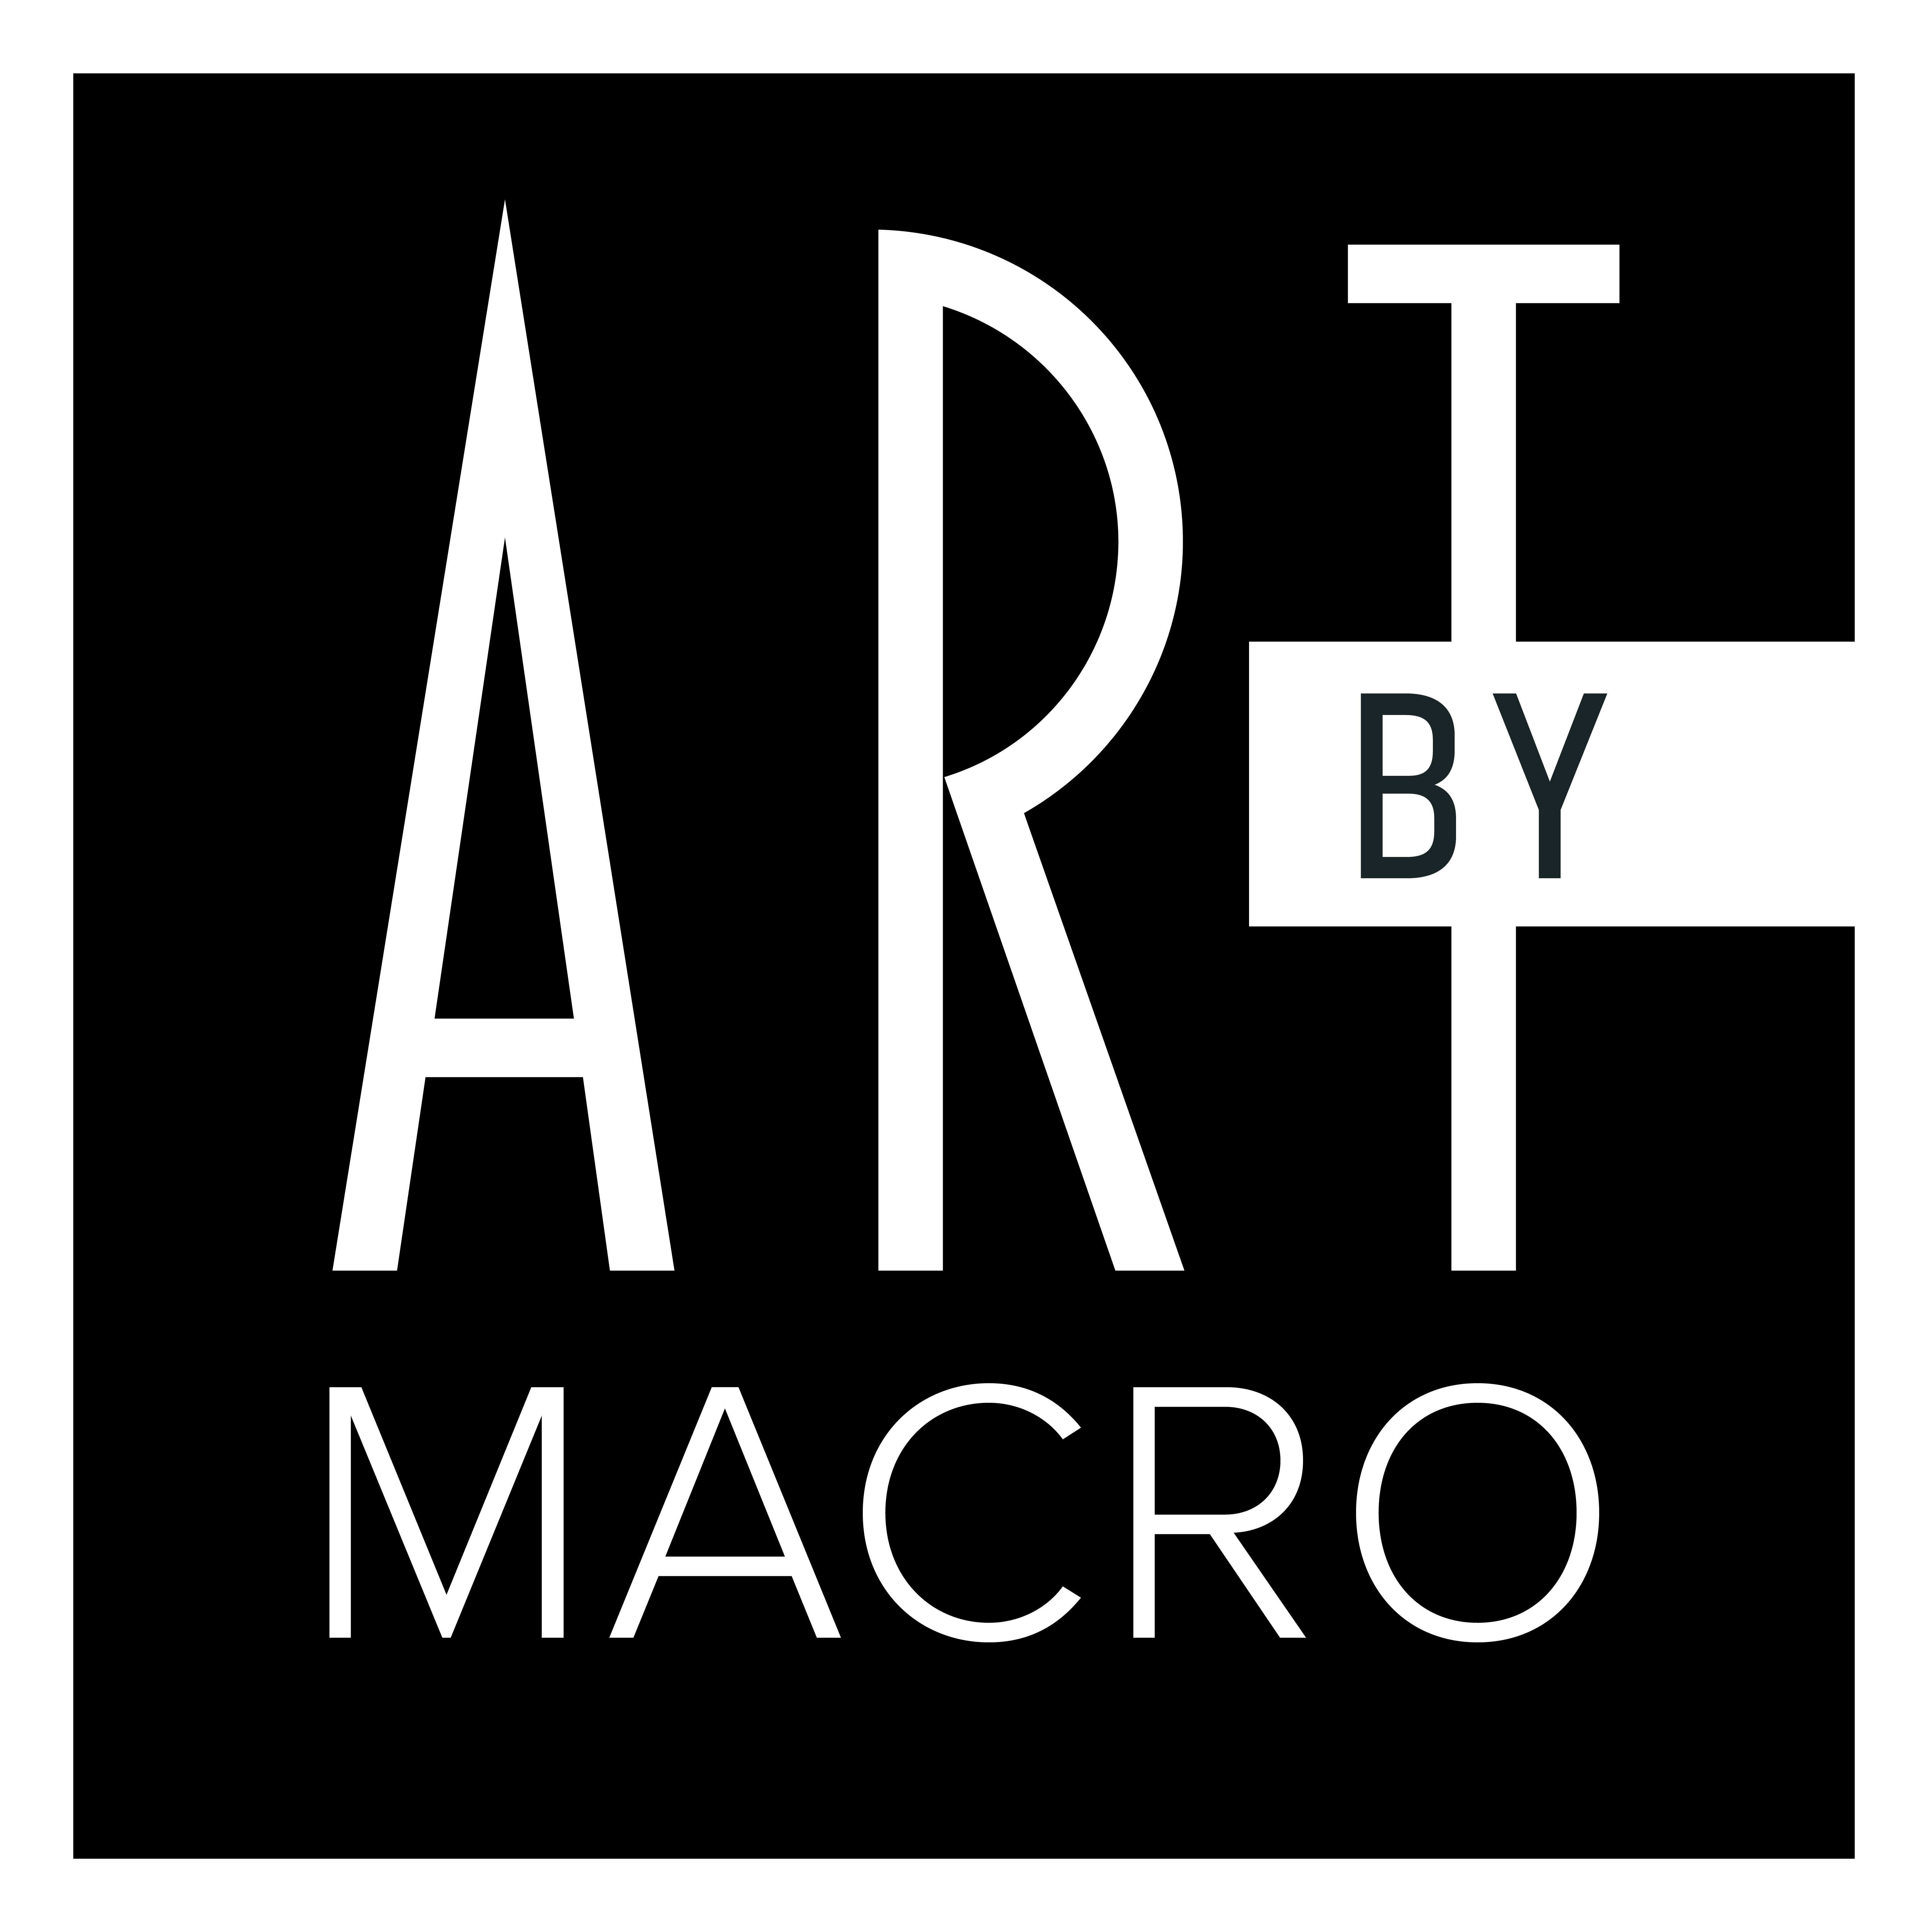 ART BY MACRO